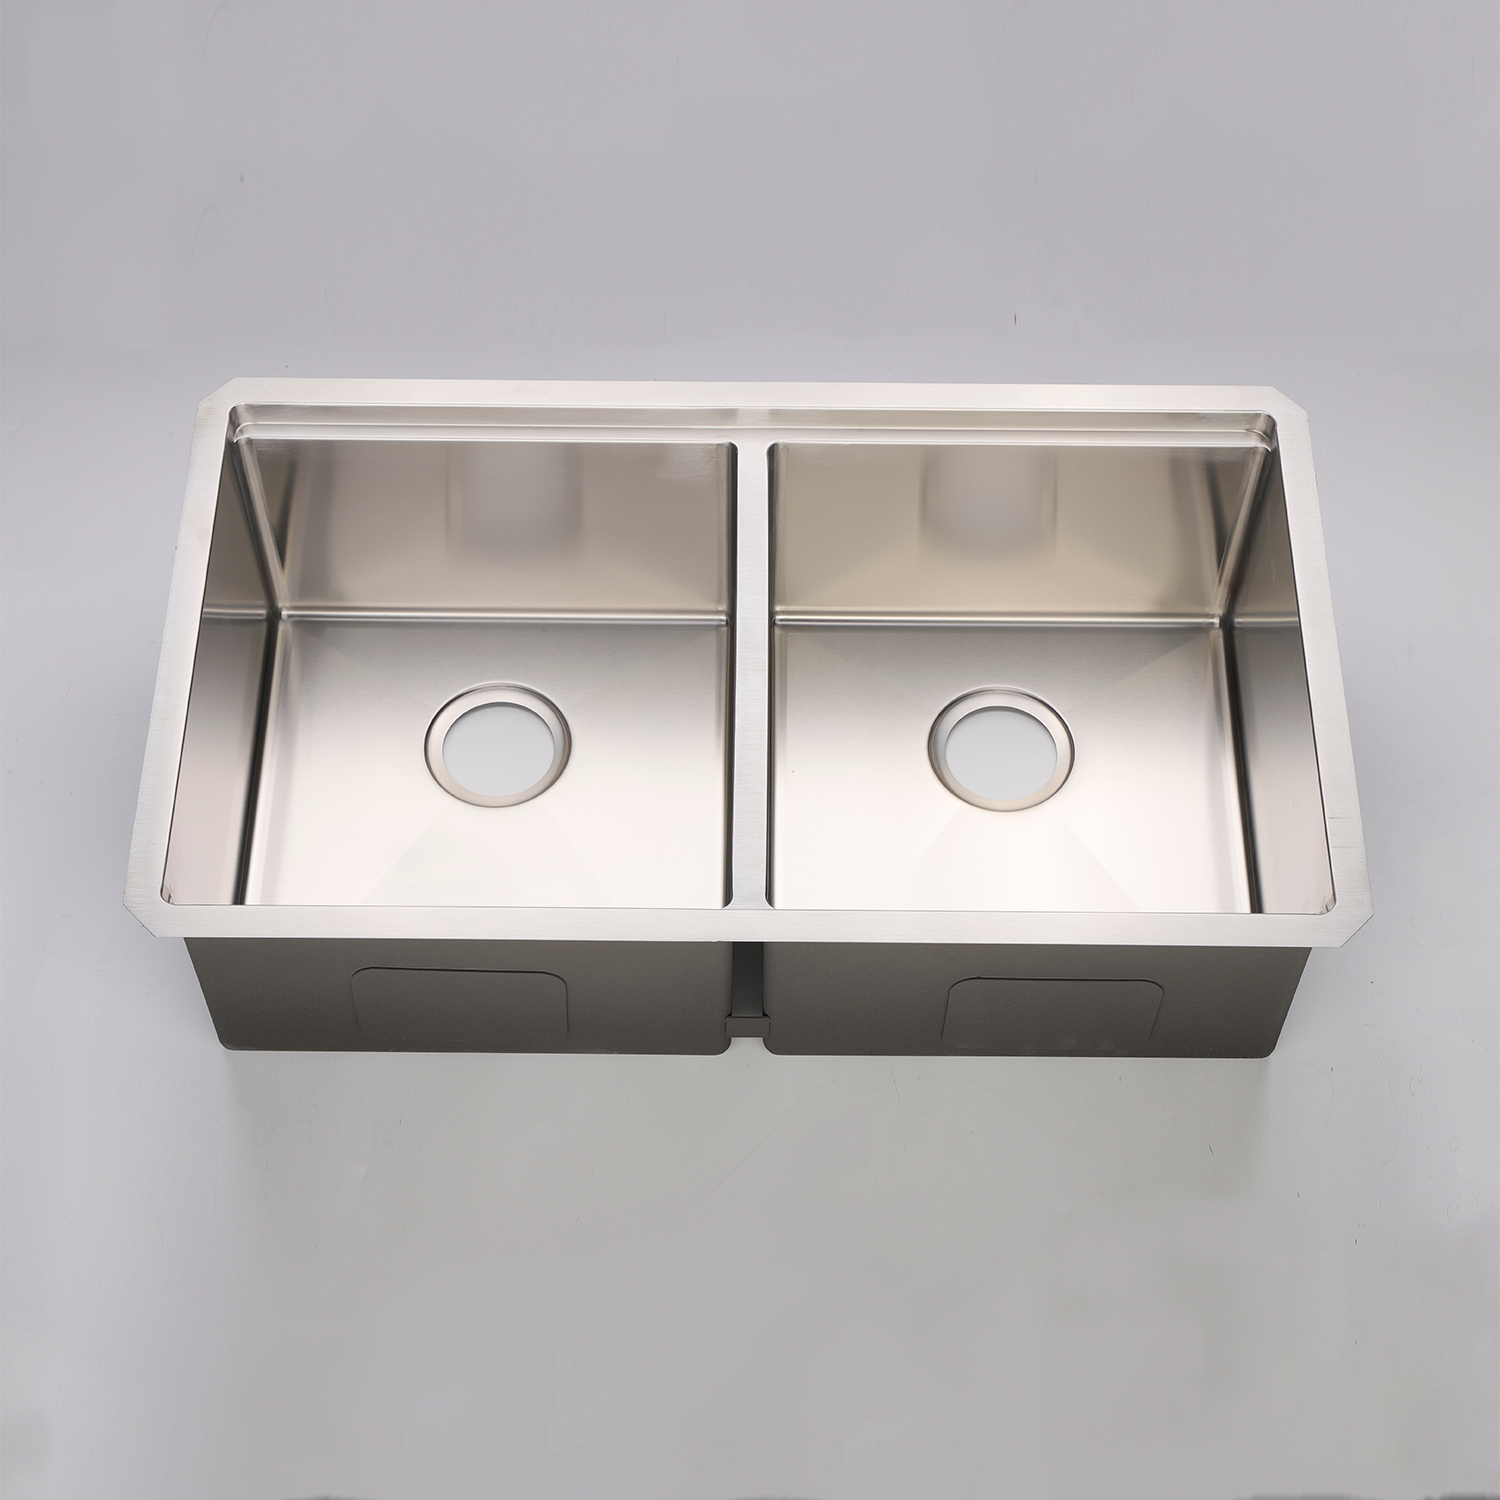 DAX Workstation Double Bowl Undermount Kitchen Sink 32 x 19 - R10 - 18G. Accessories Included